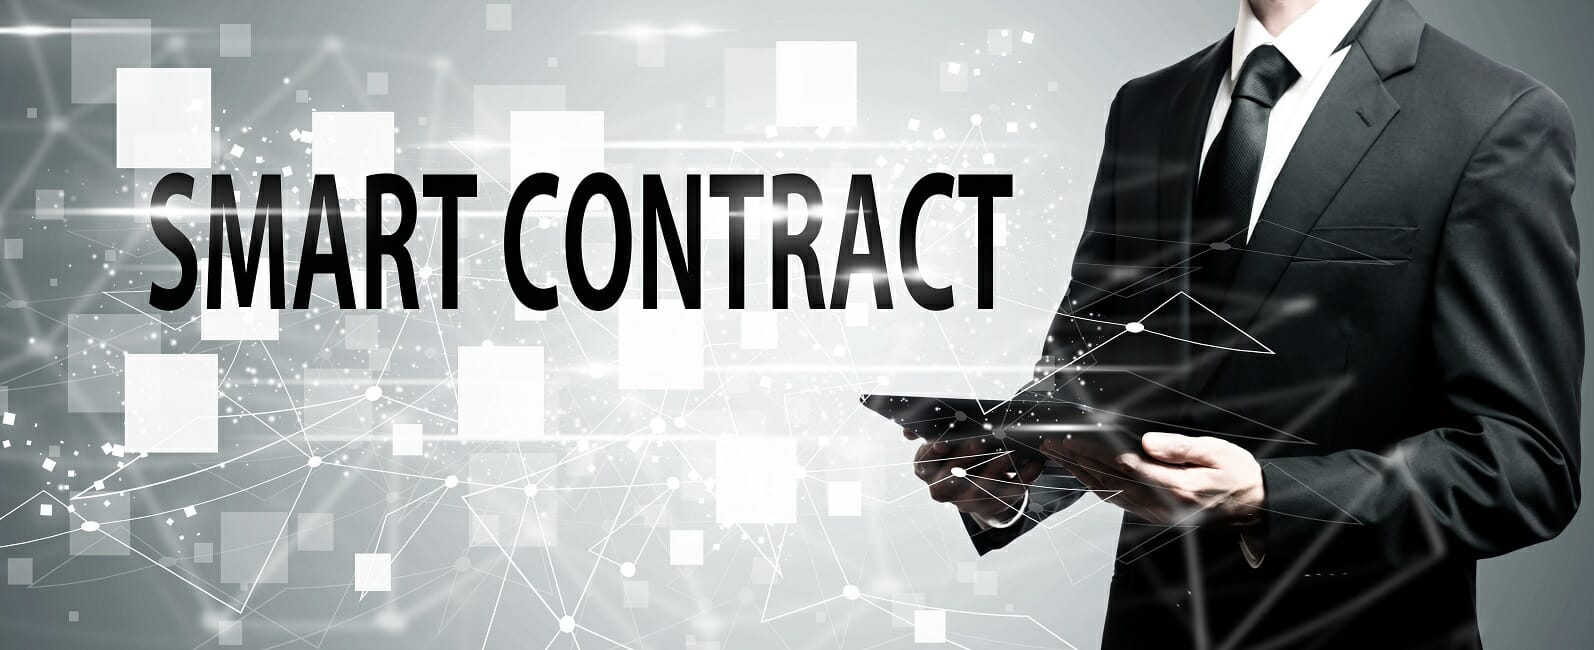 Smart Contract 